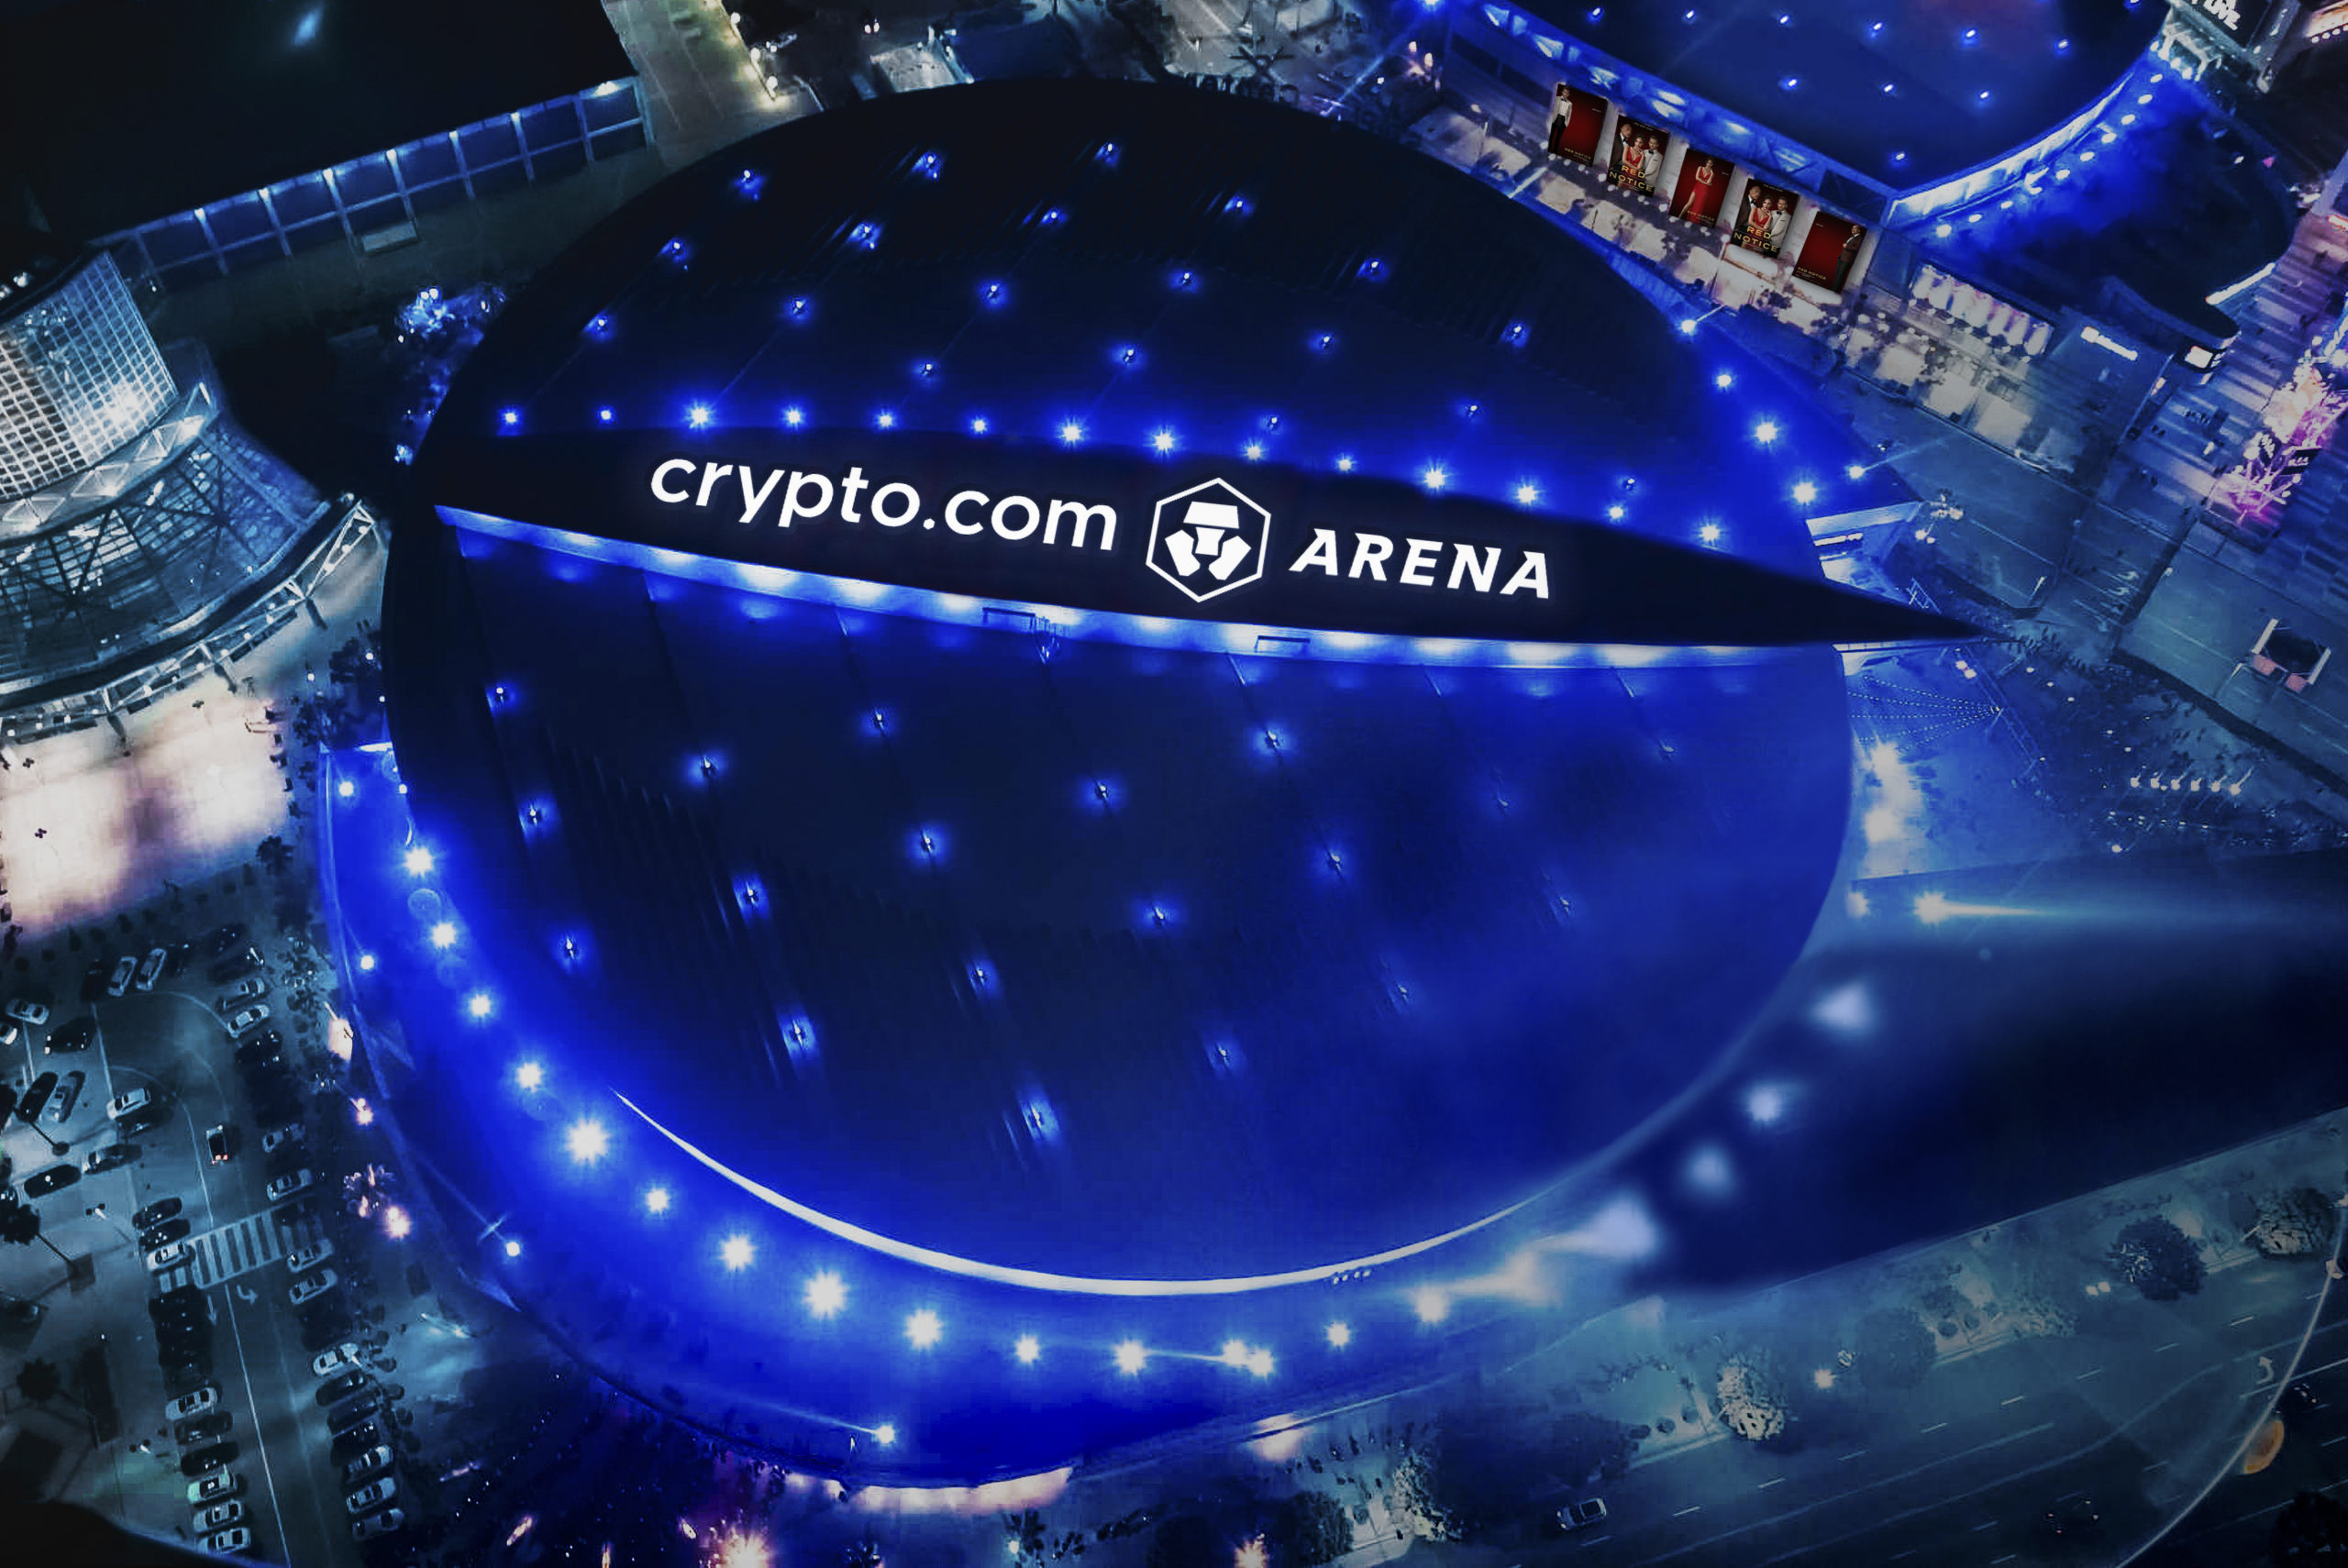 crypto arena virtual seating